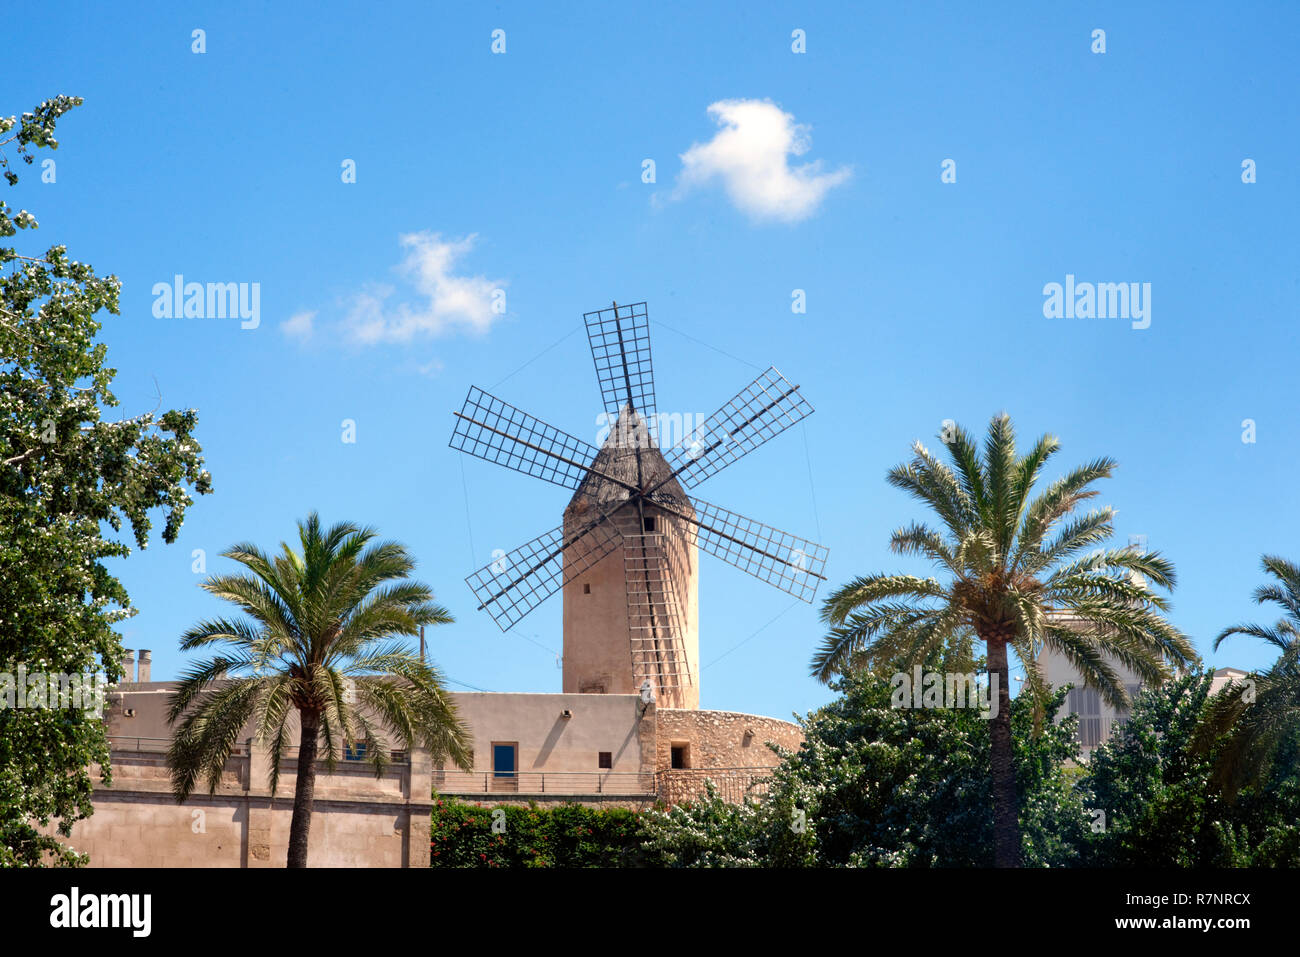 Windmills dominate the high terrain of El Jonquet above the marina area in Palma de Mallorca, Balearic Islands, Spain. Stock Photo